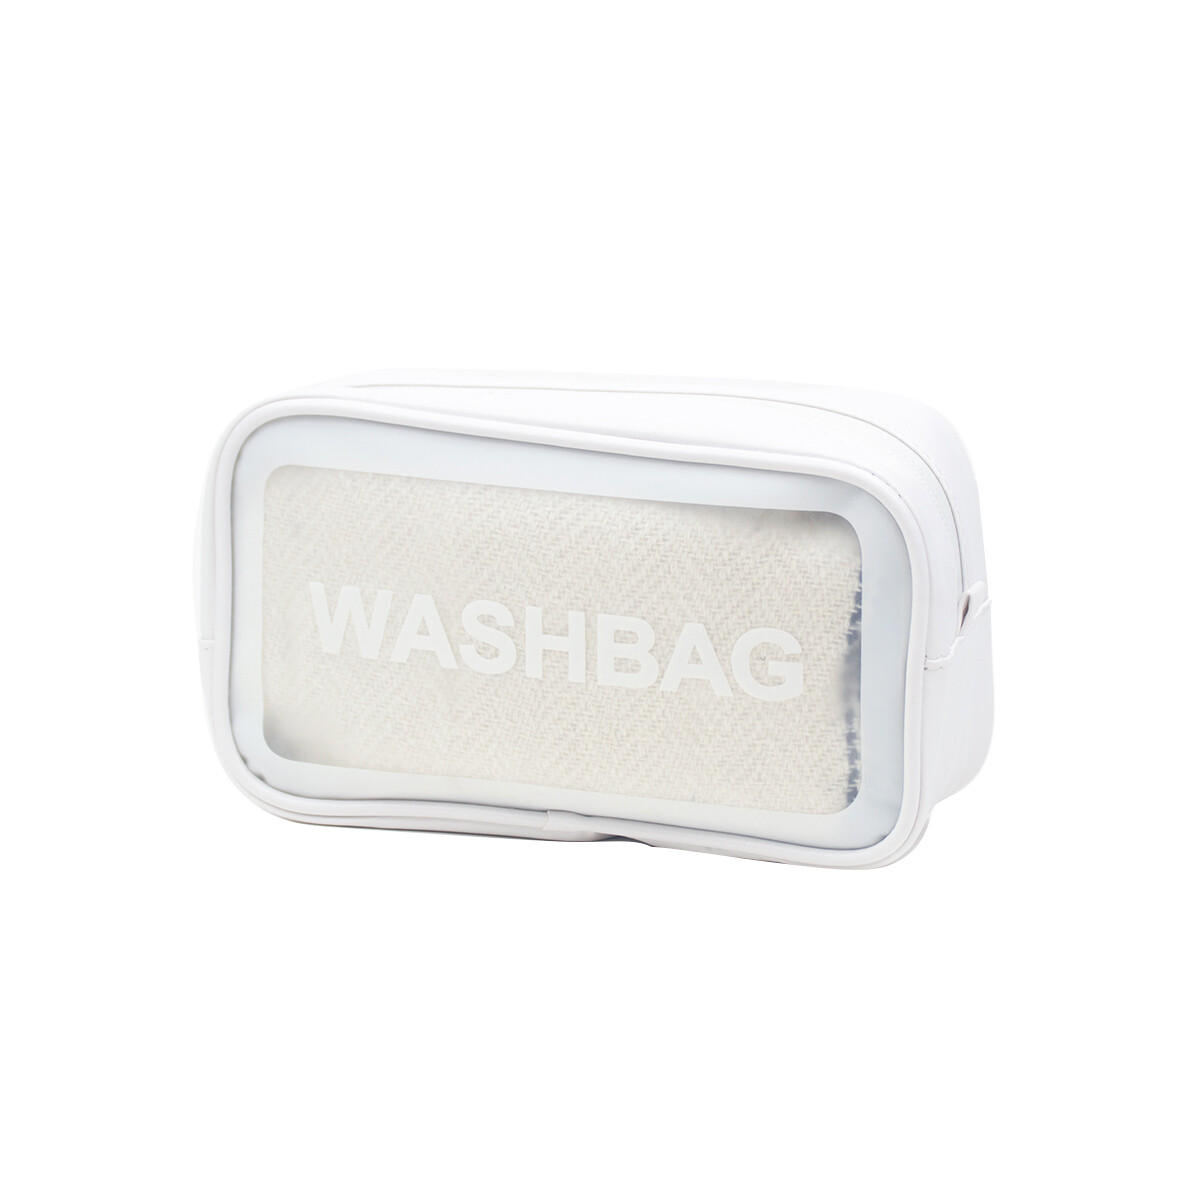 Neceser Transparente Washbag - Blanco 